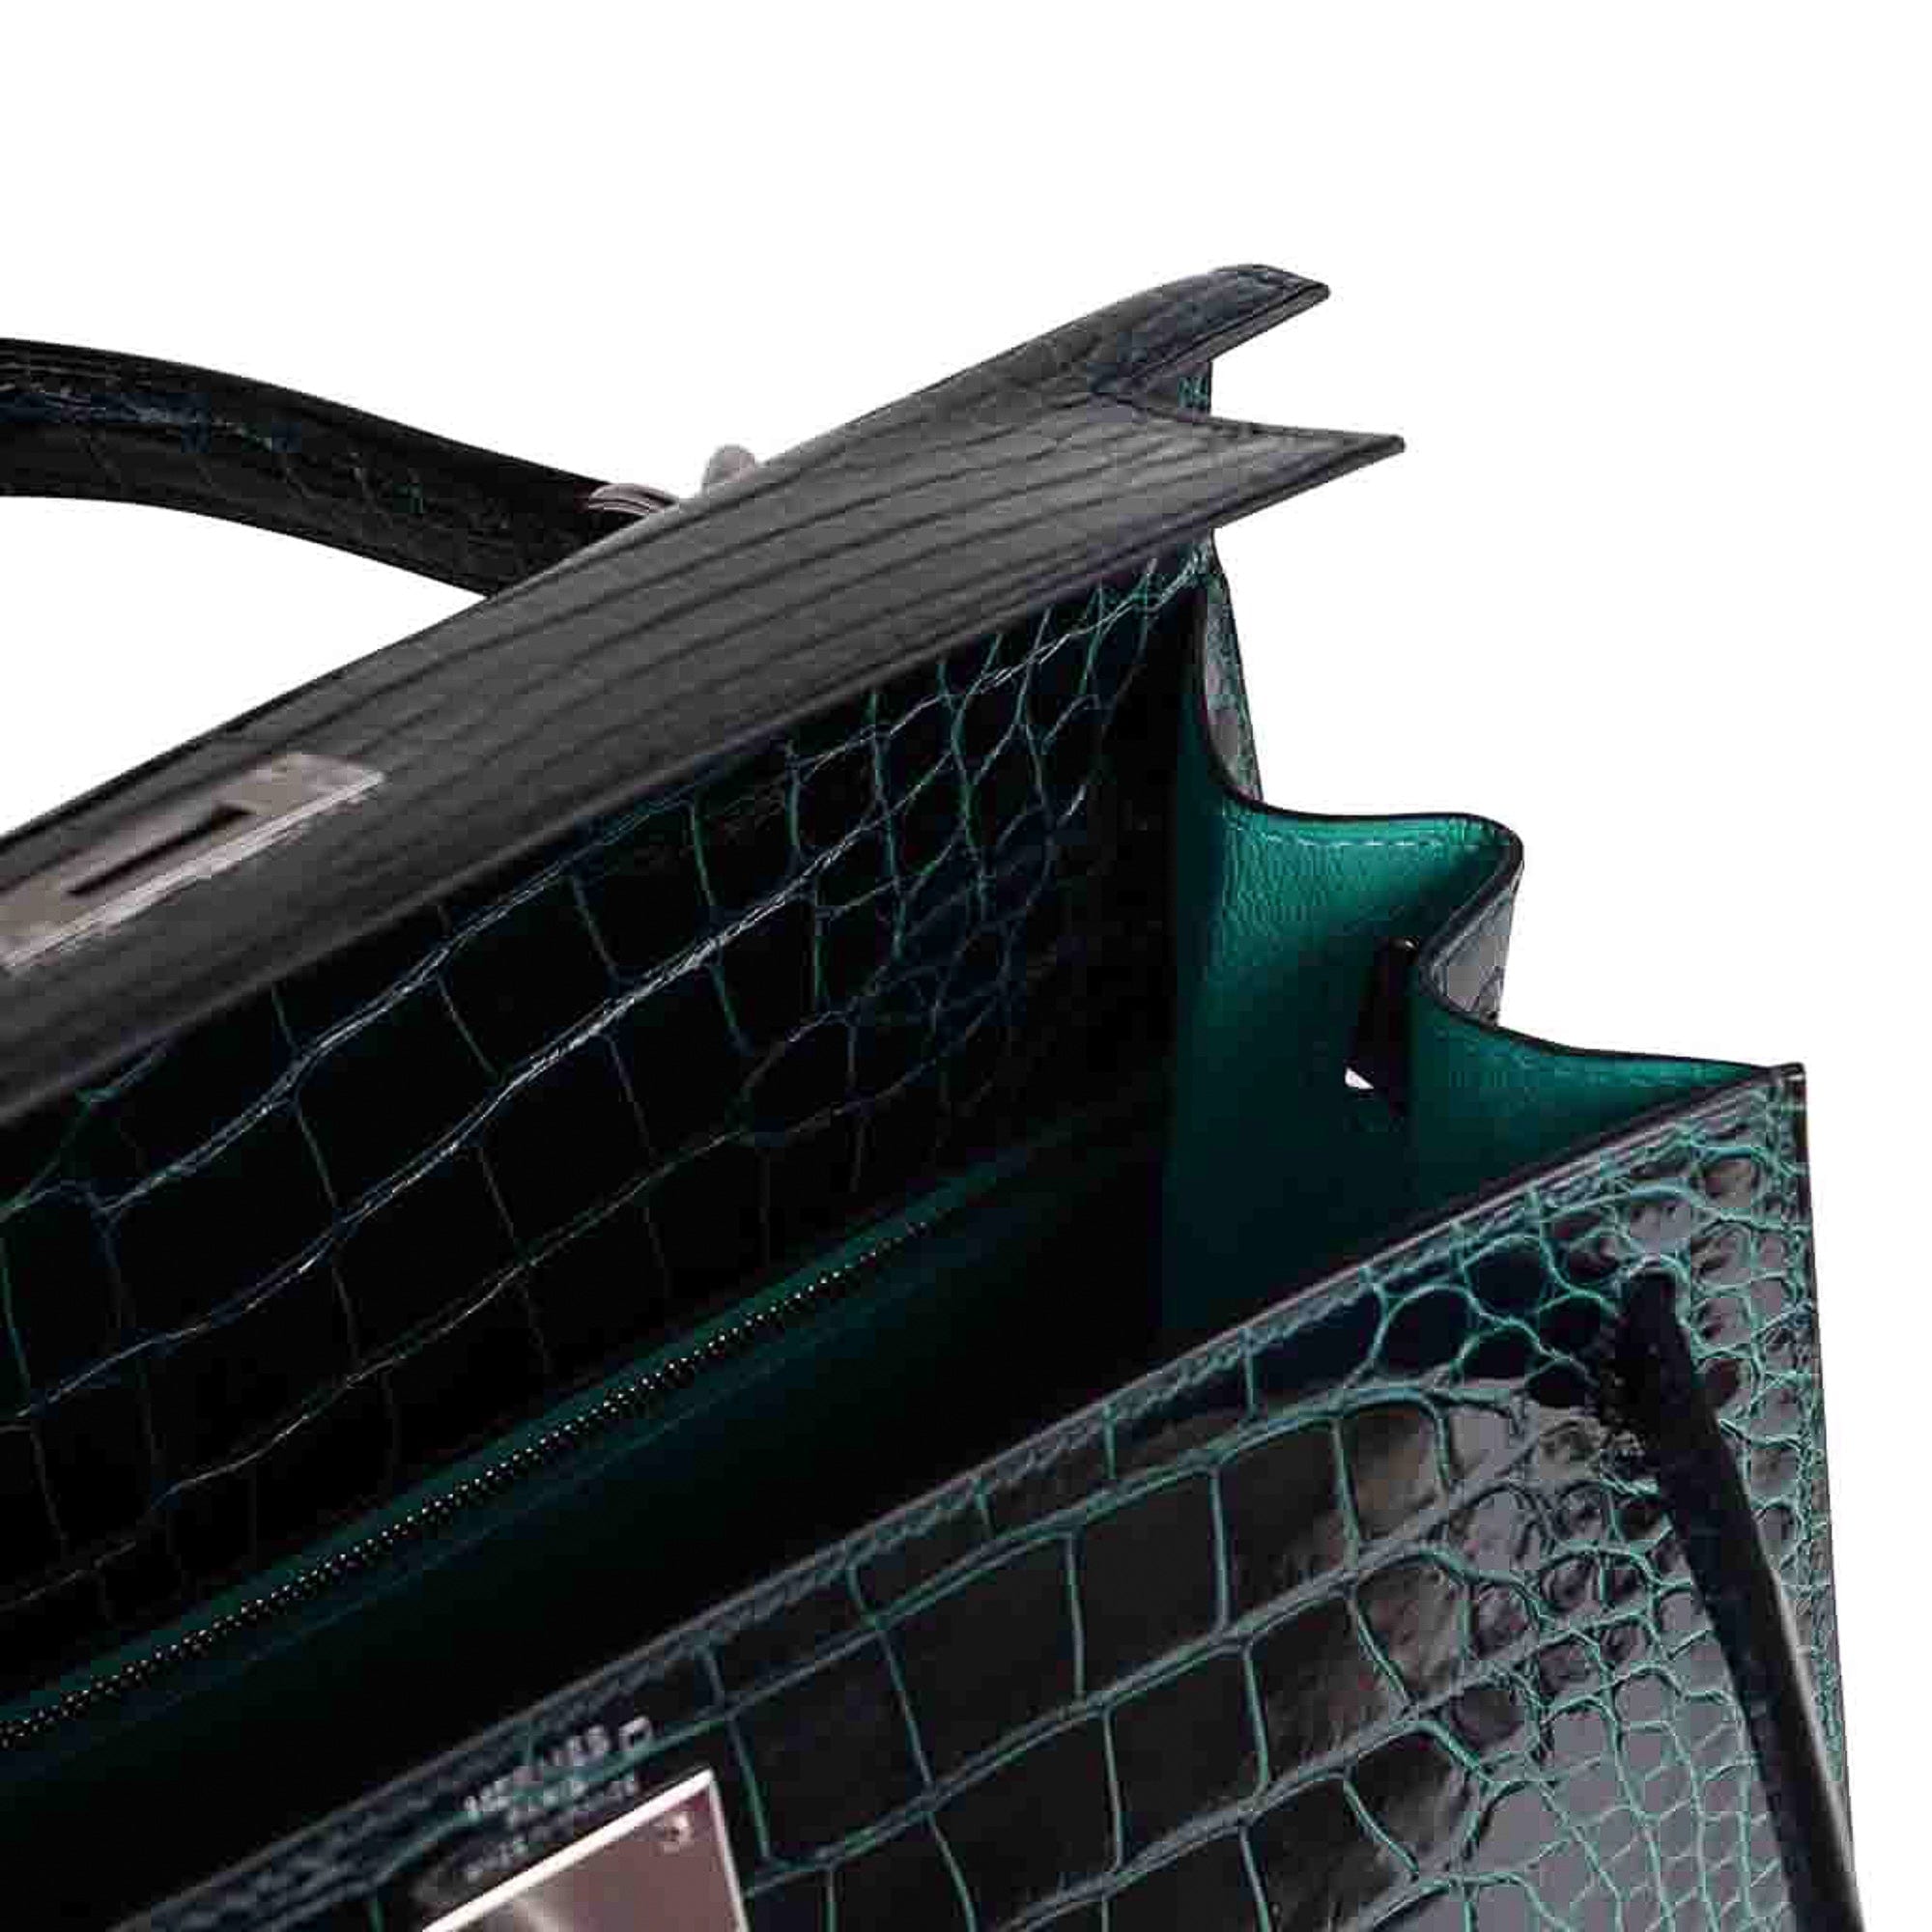 Hermès Kelly Sellier Mini II Vert Cypress Matte Crocodile Alligator PHW  from 100% authentic materials!